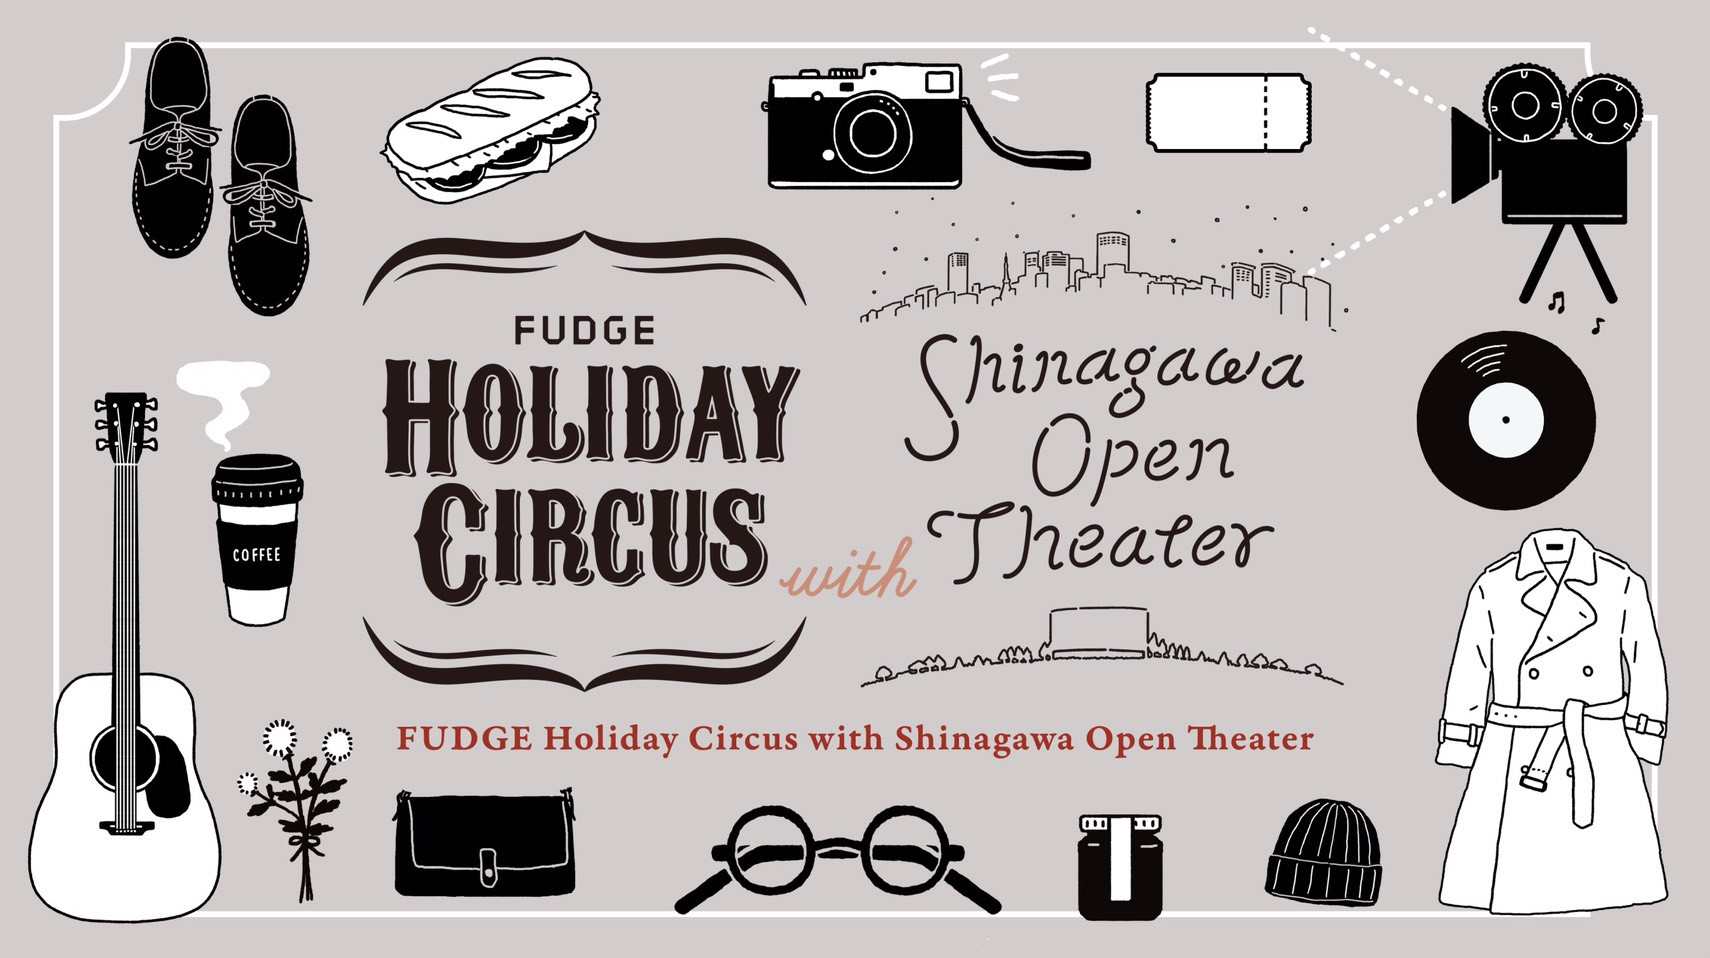 「FUDGE Holiday Circus with Shinagawa Open Theater」